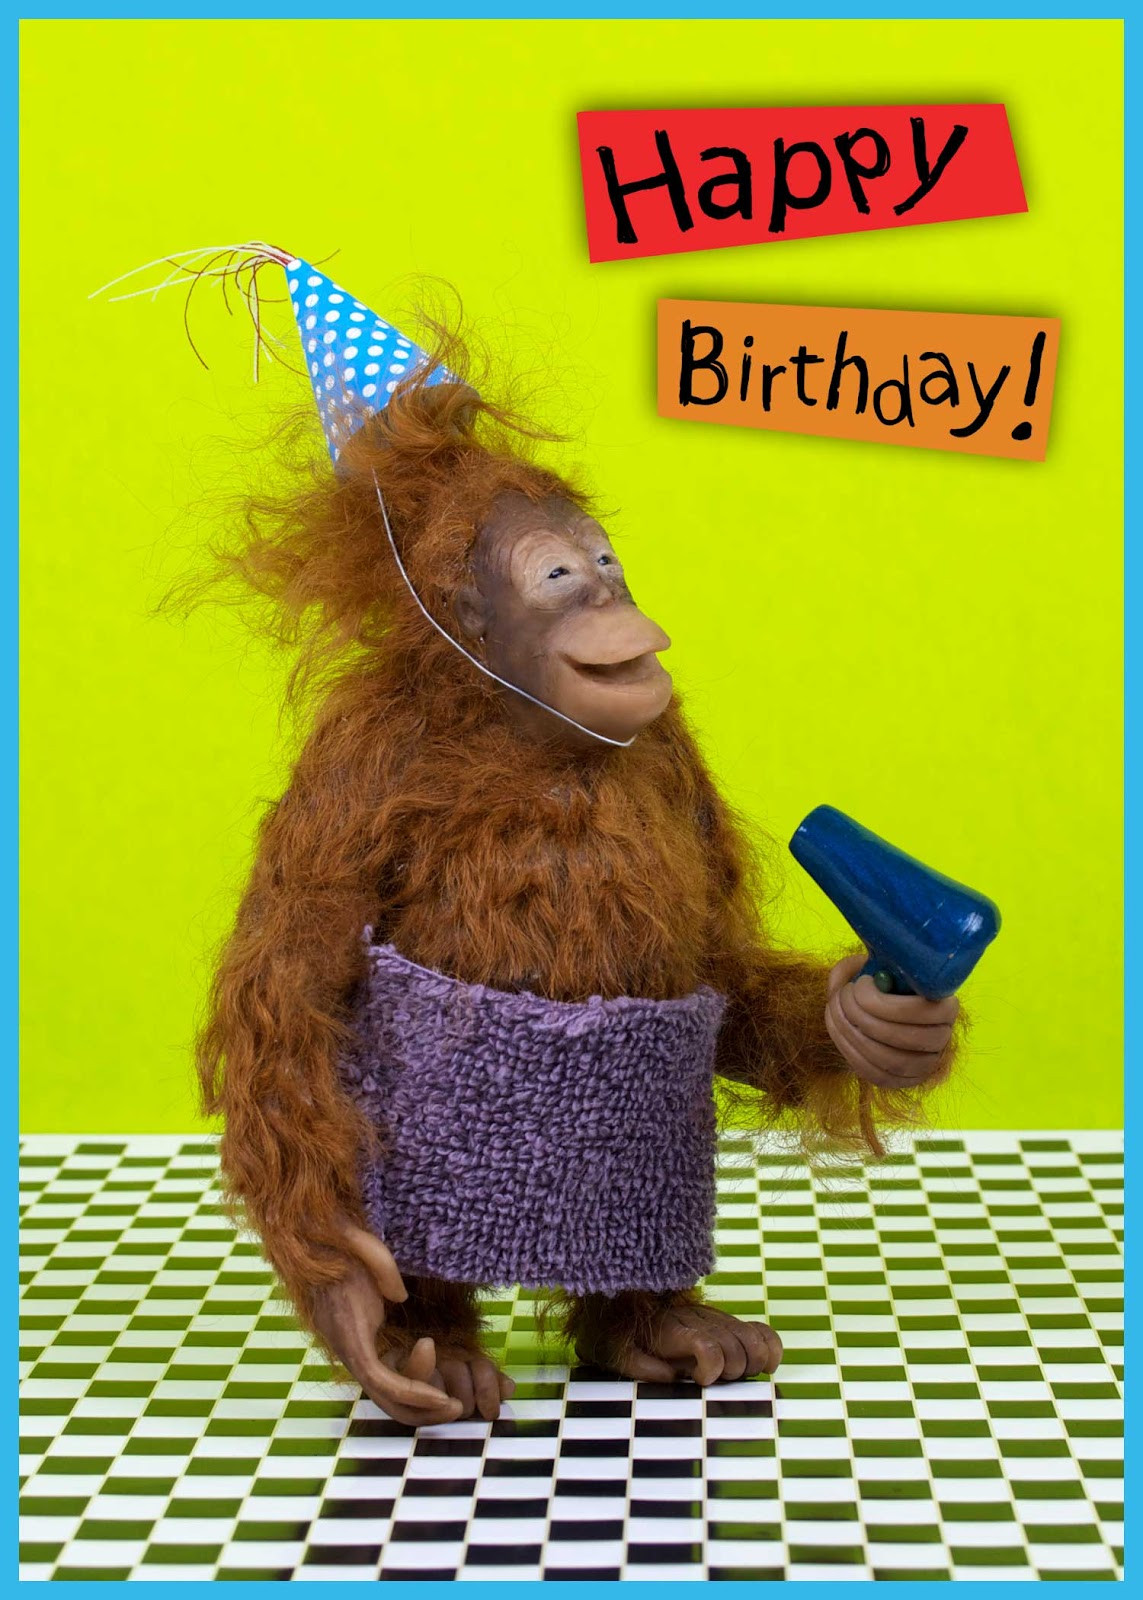 Birthday Wishes Funny Images
 Caroline Gray Work in Progress Kids’ Birthday Cards